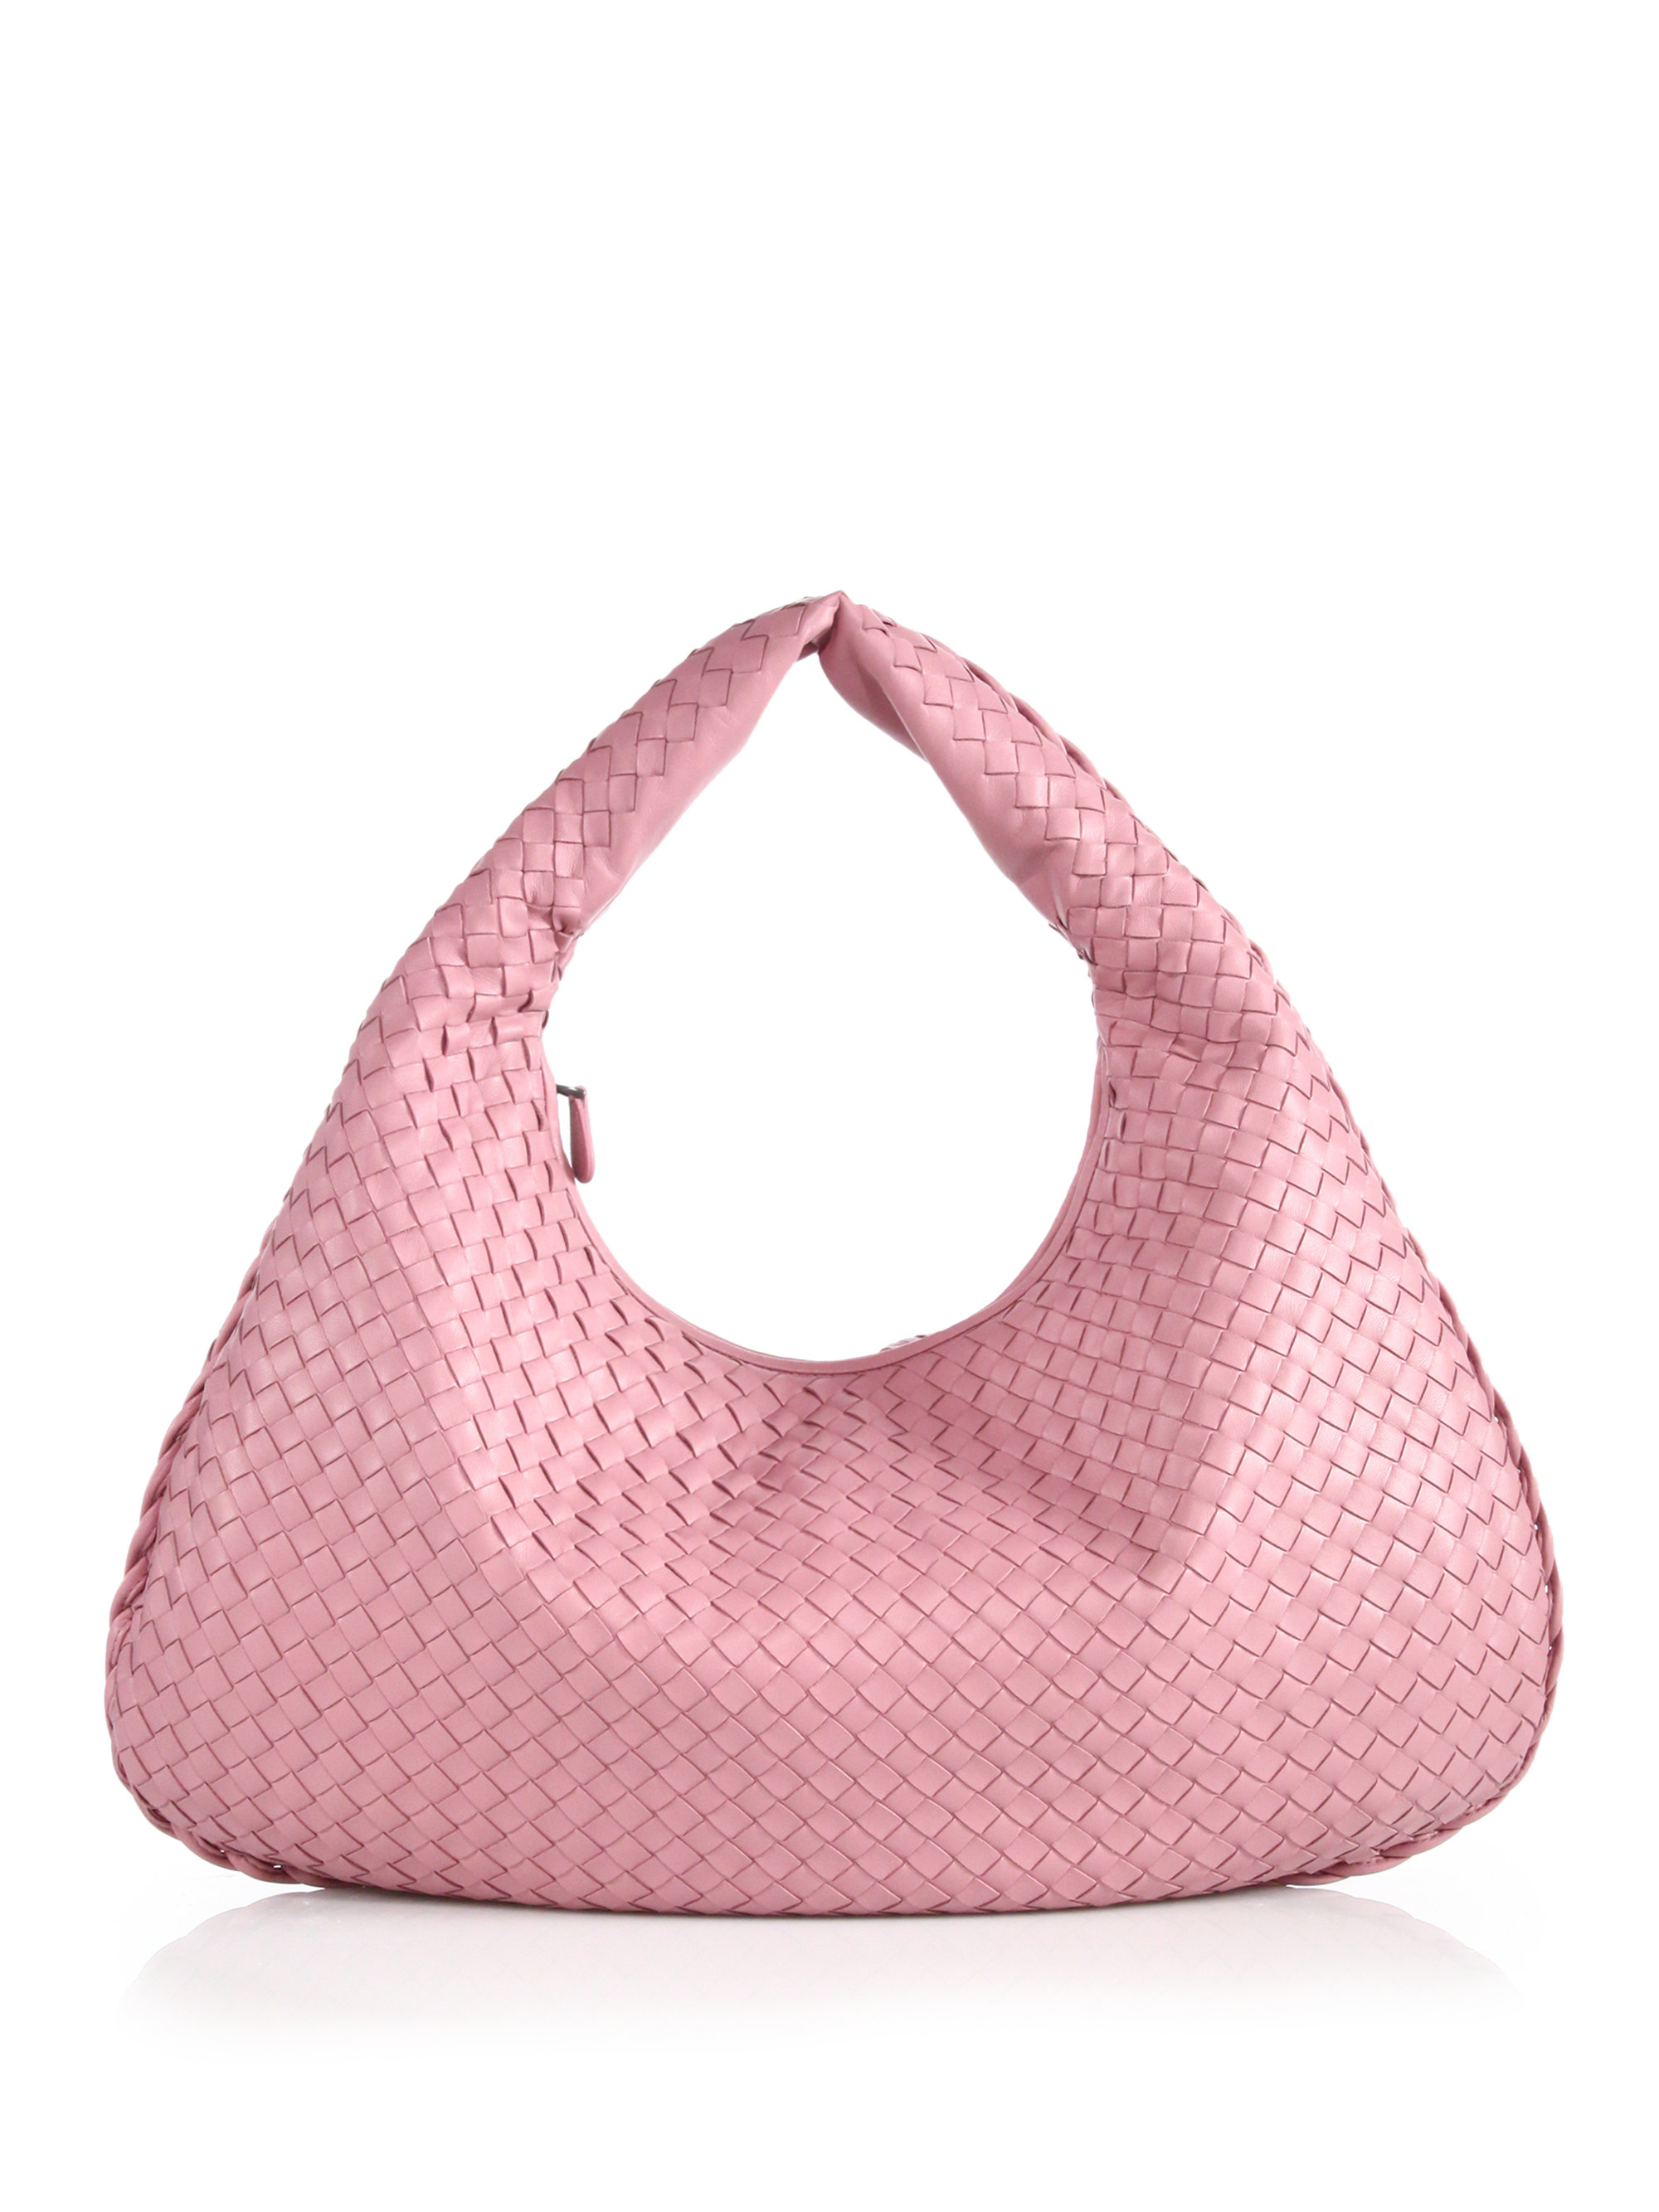 Bottega Veneta Veneta Large Hobo Bag in Pink | Lyst